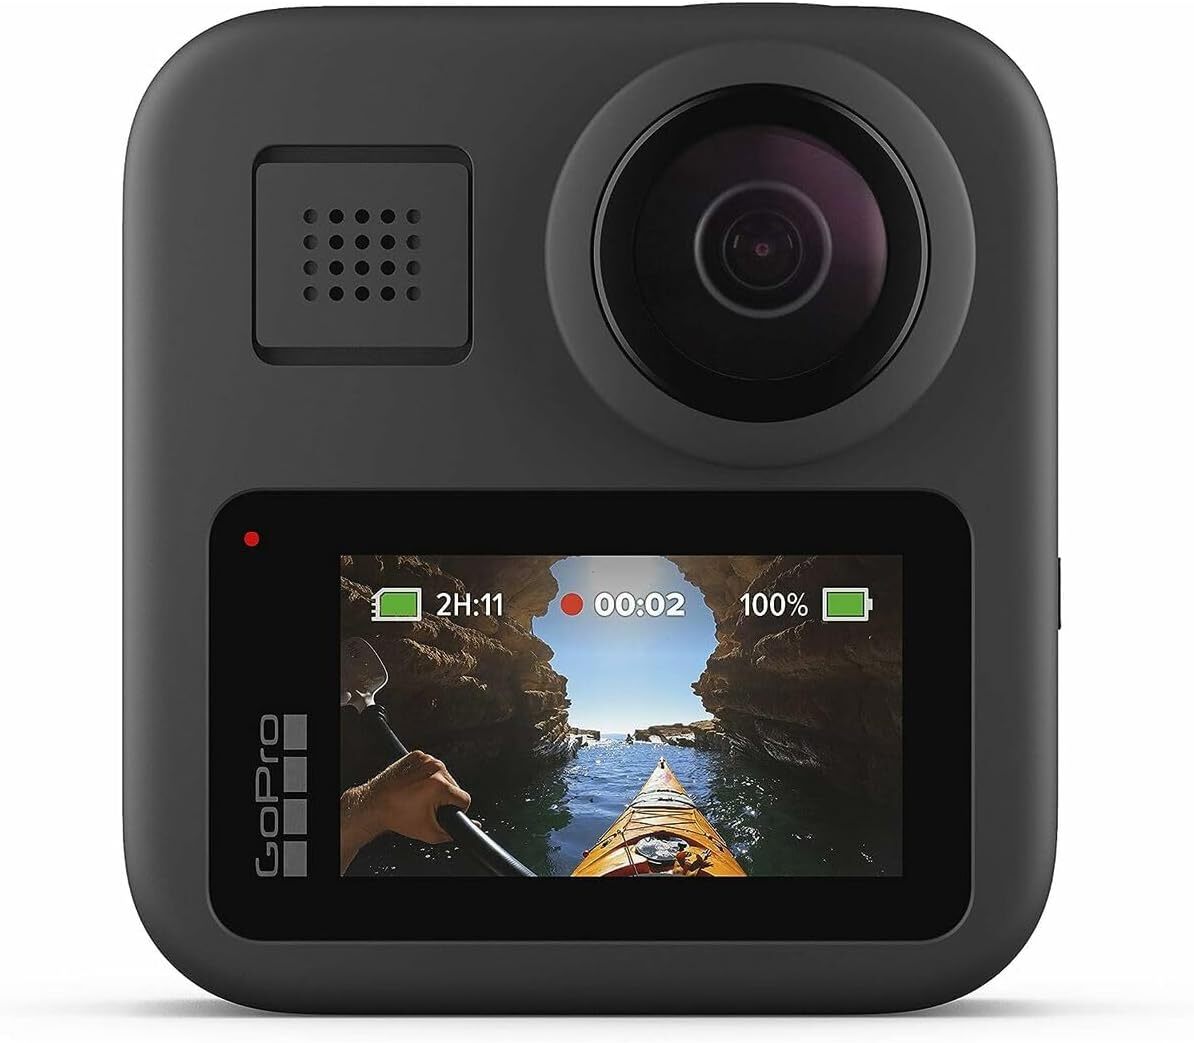 Caméra sport embarquée étanche GoPro HERO8 - Écran Tactile - Vidéo HD 4K -  Image 12 MP - Cdiscount Appareil Photo